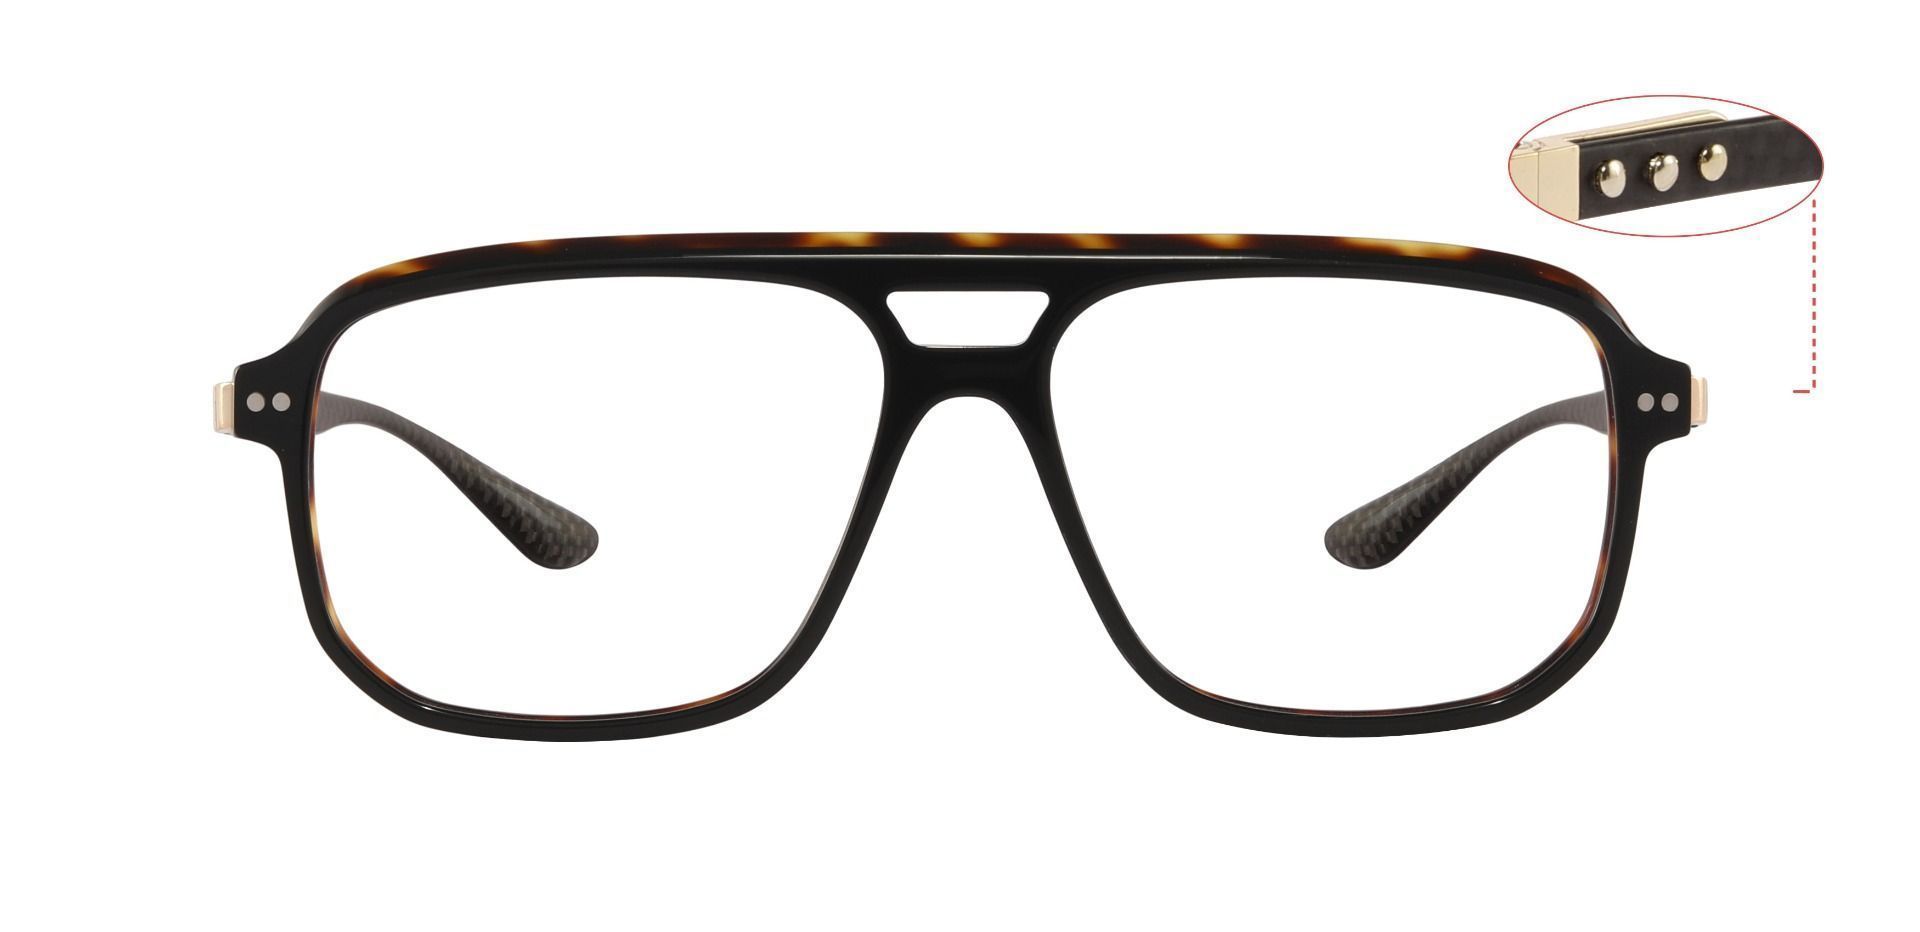 Lopez Aviator Progressive Glasses - Tortoise/Carbon Fiber Temples | Men ...